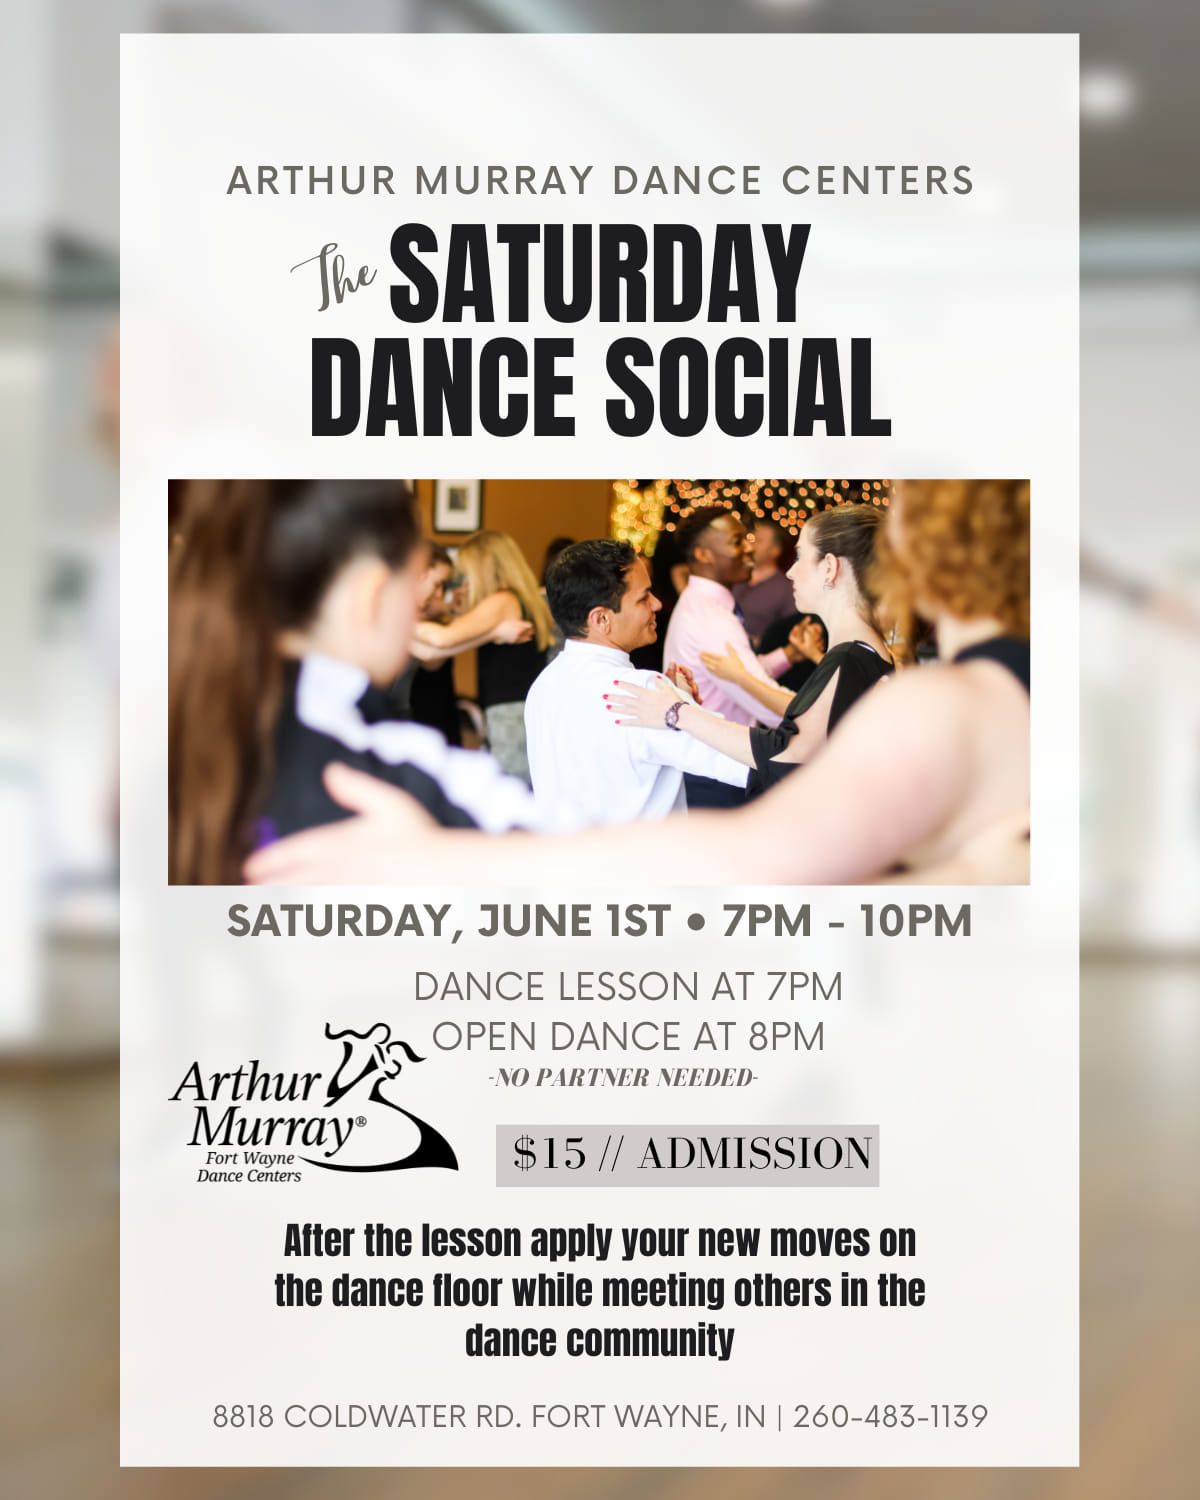 The Saturday Dance Social